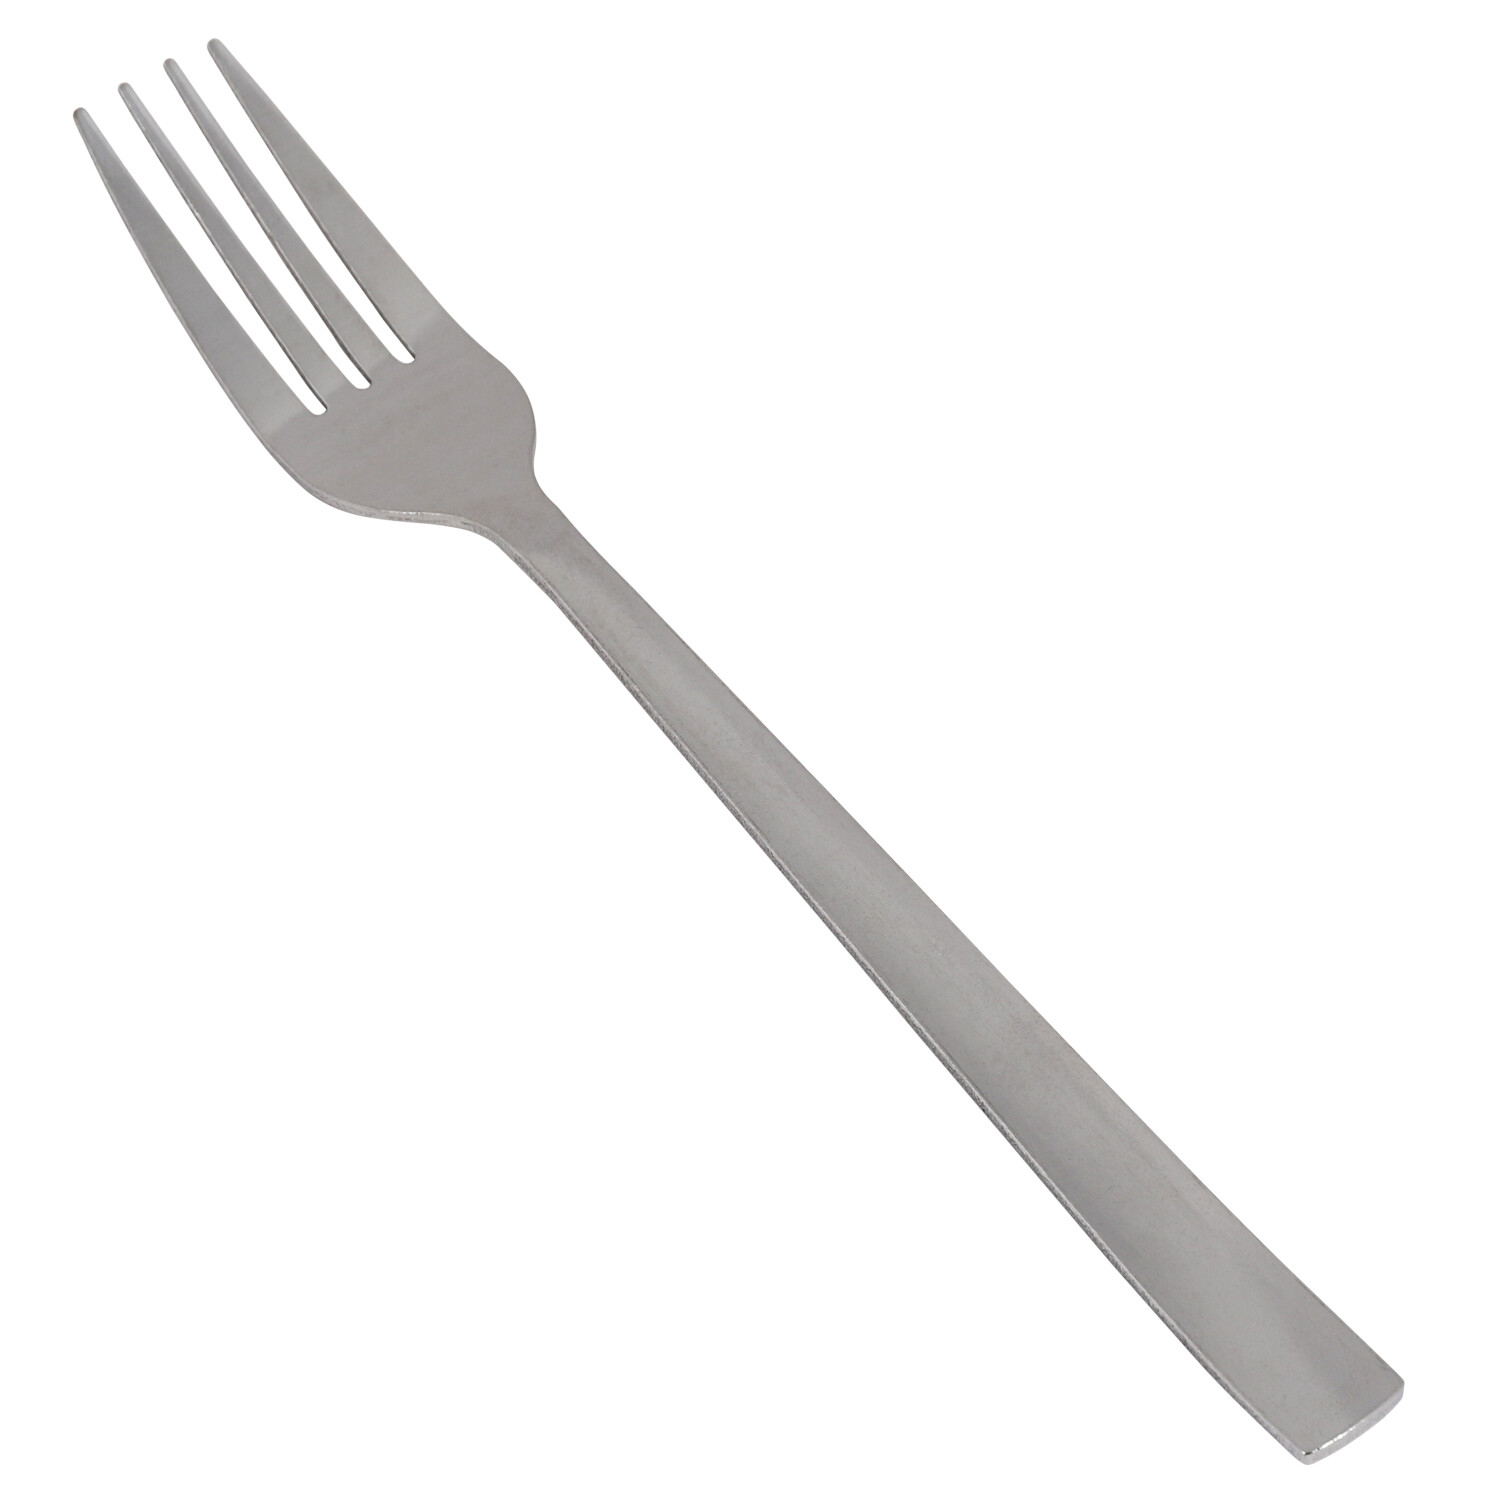 Pack of 4 Forks - Silver Image